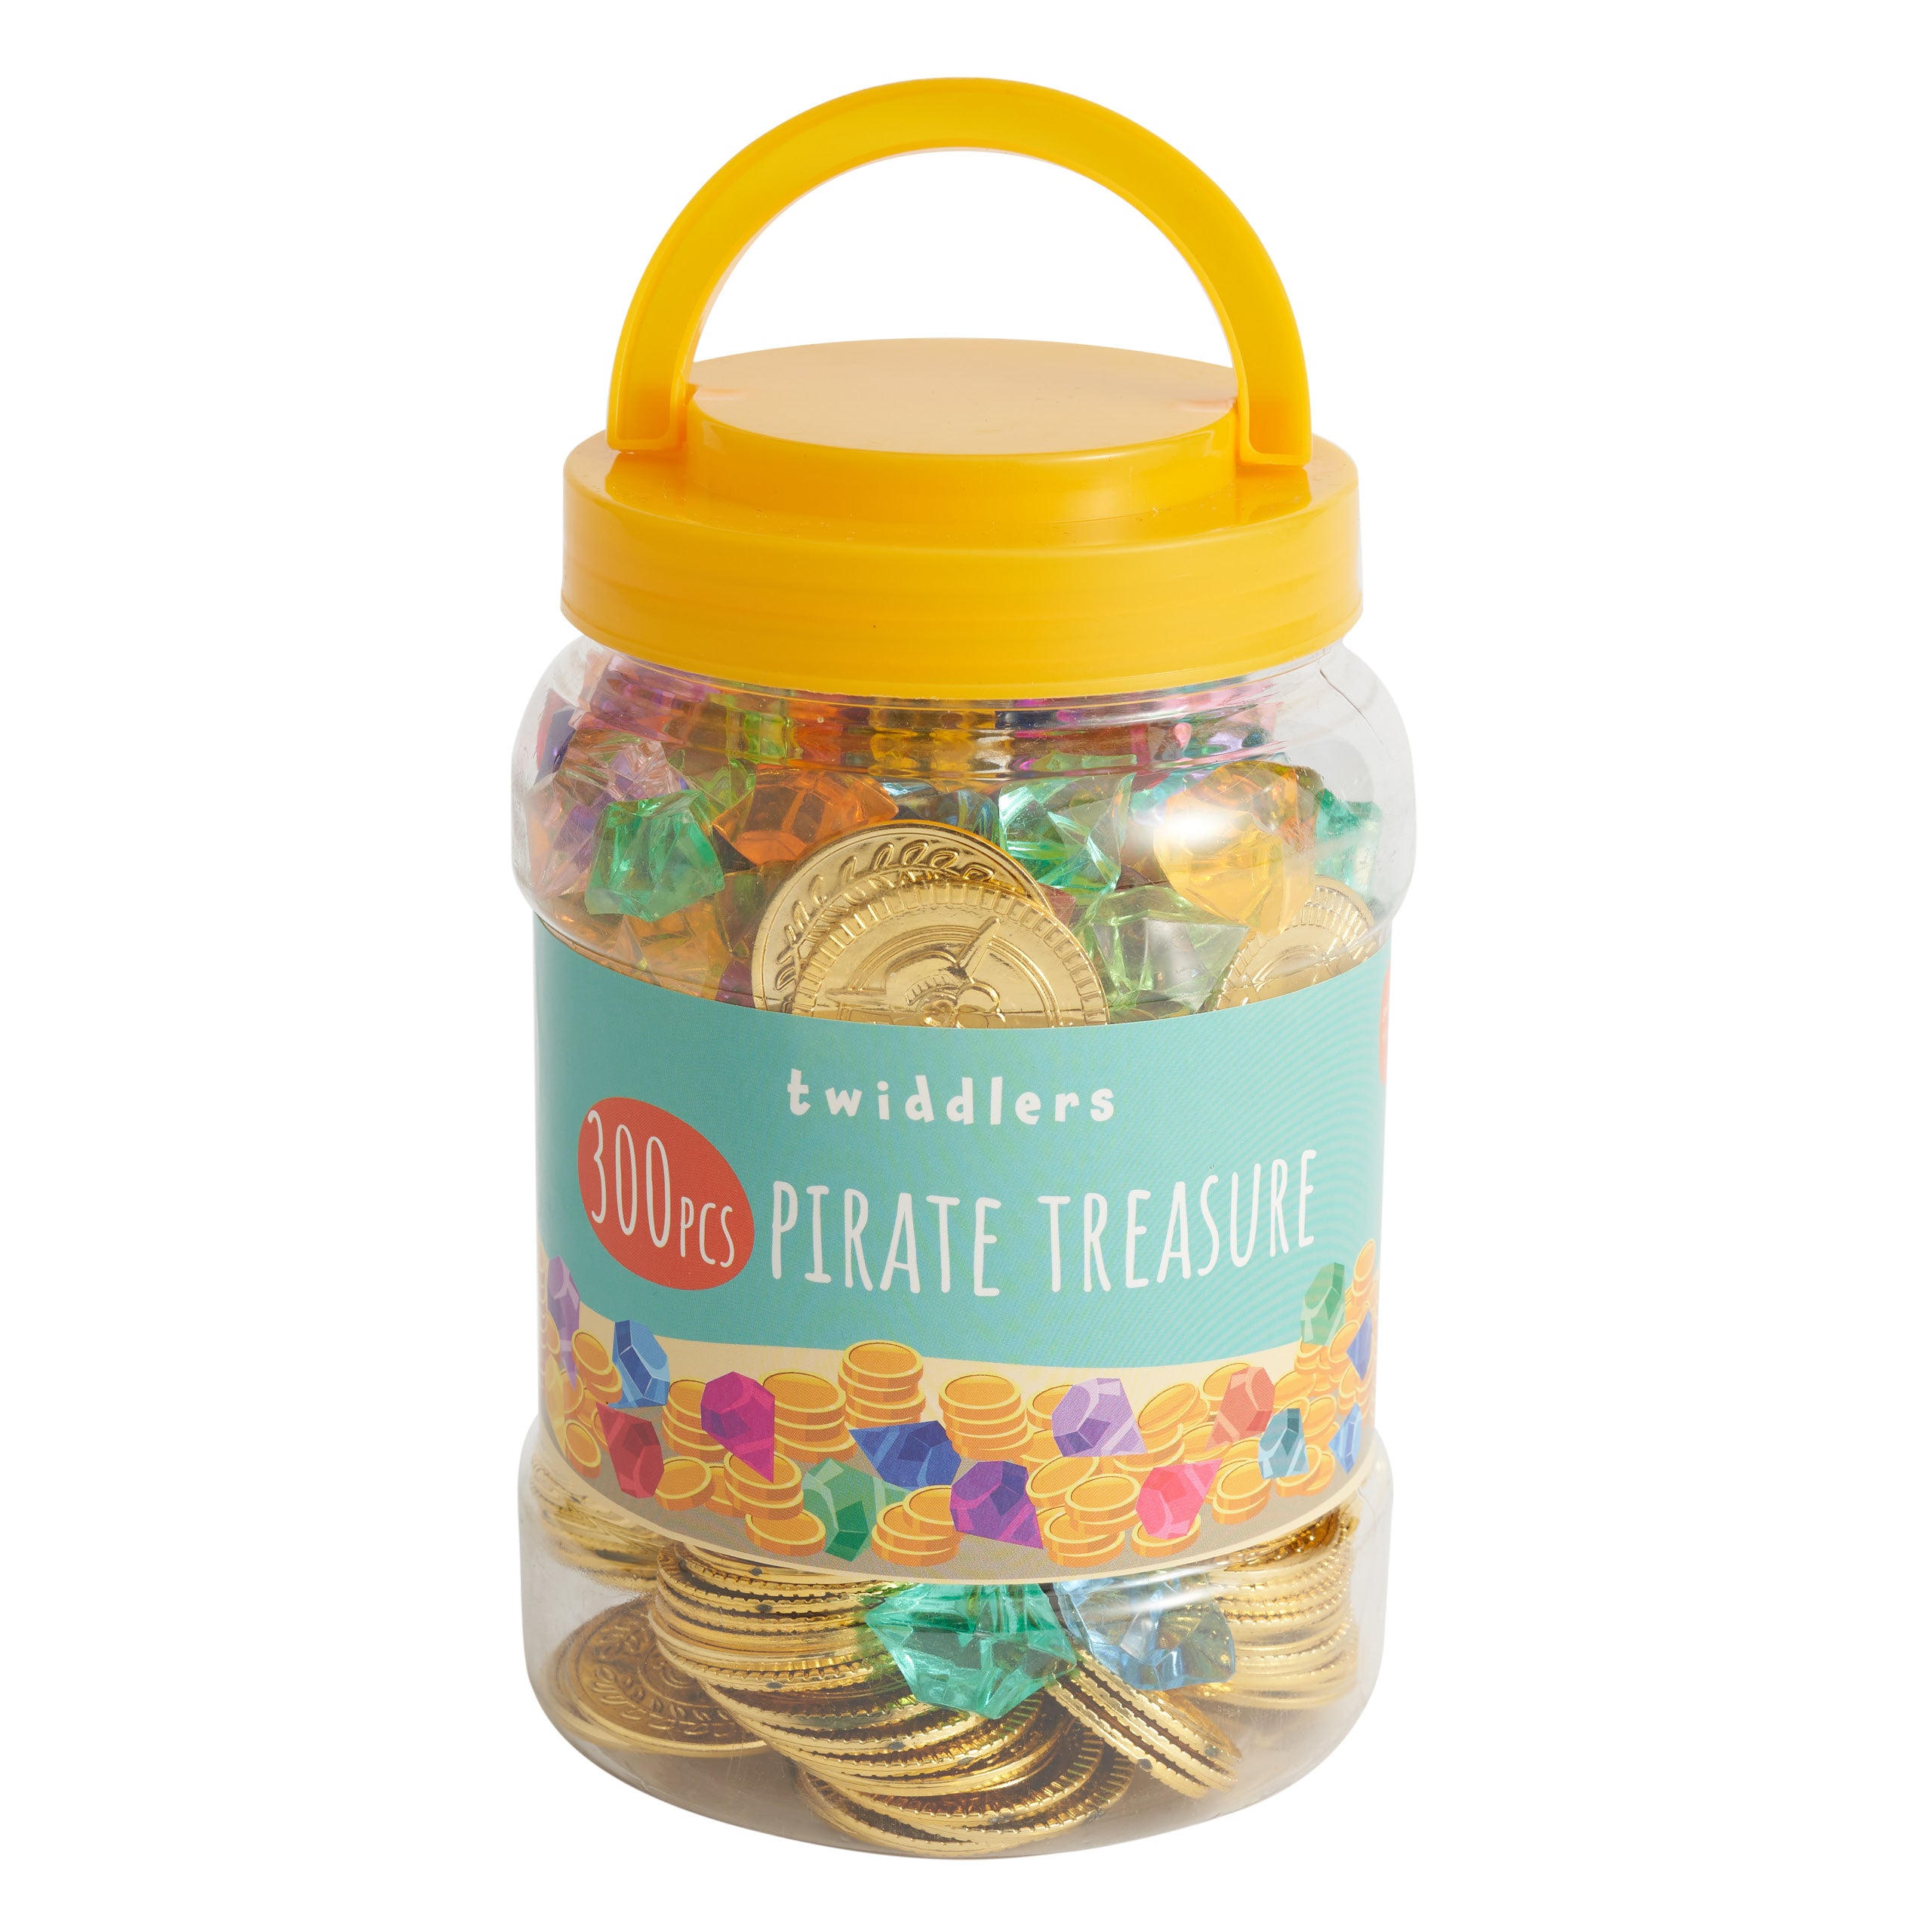 Pirate Treasure Toy Tub